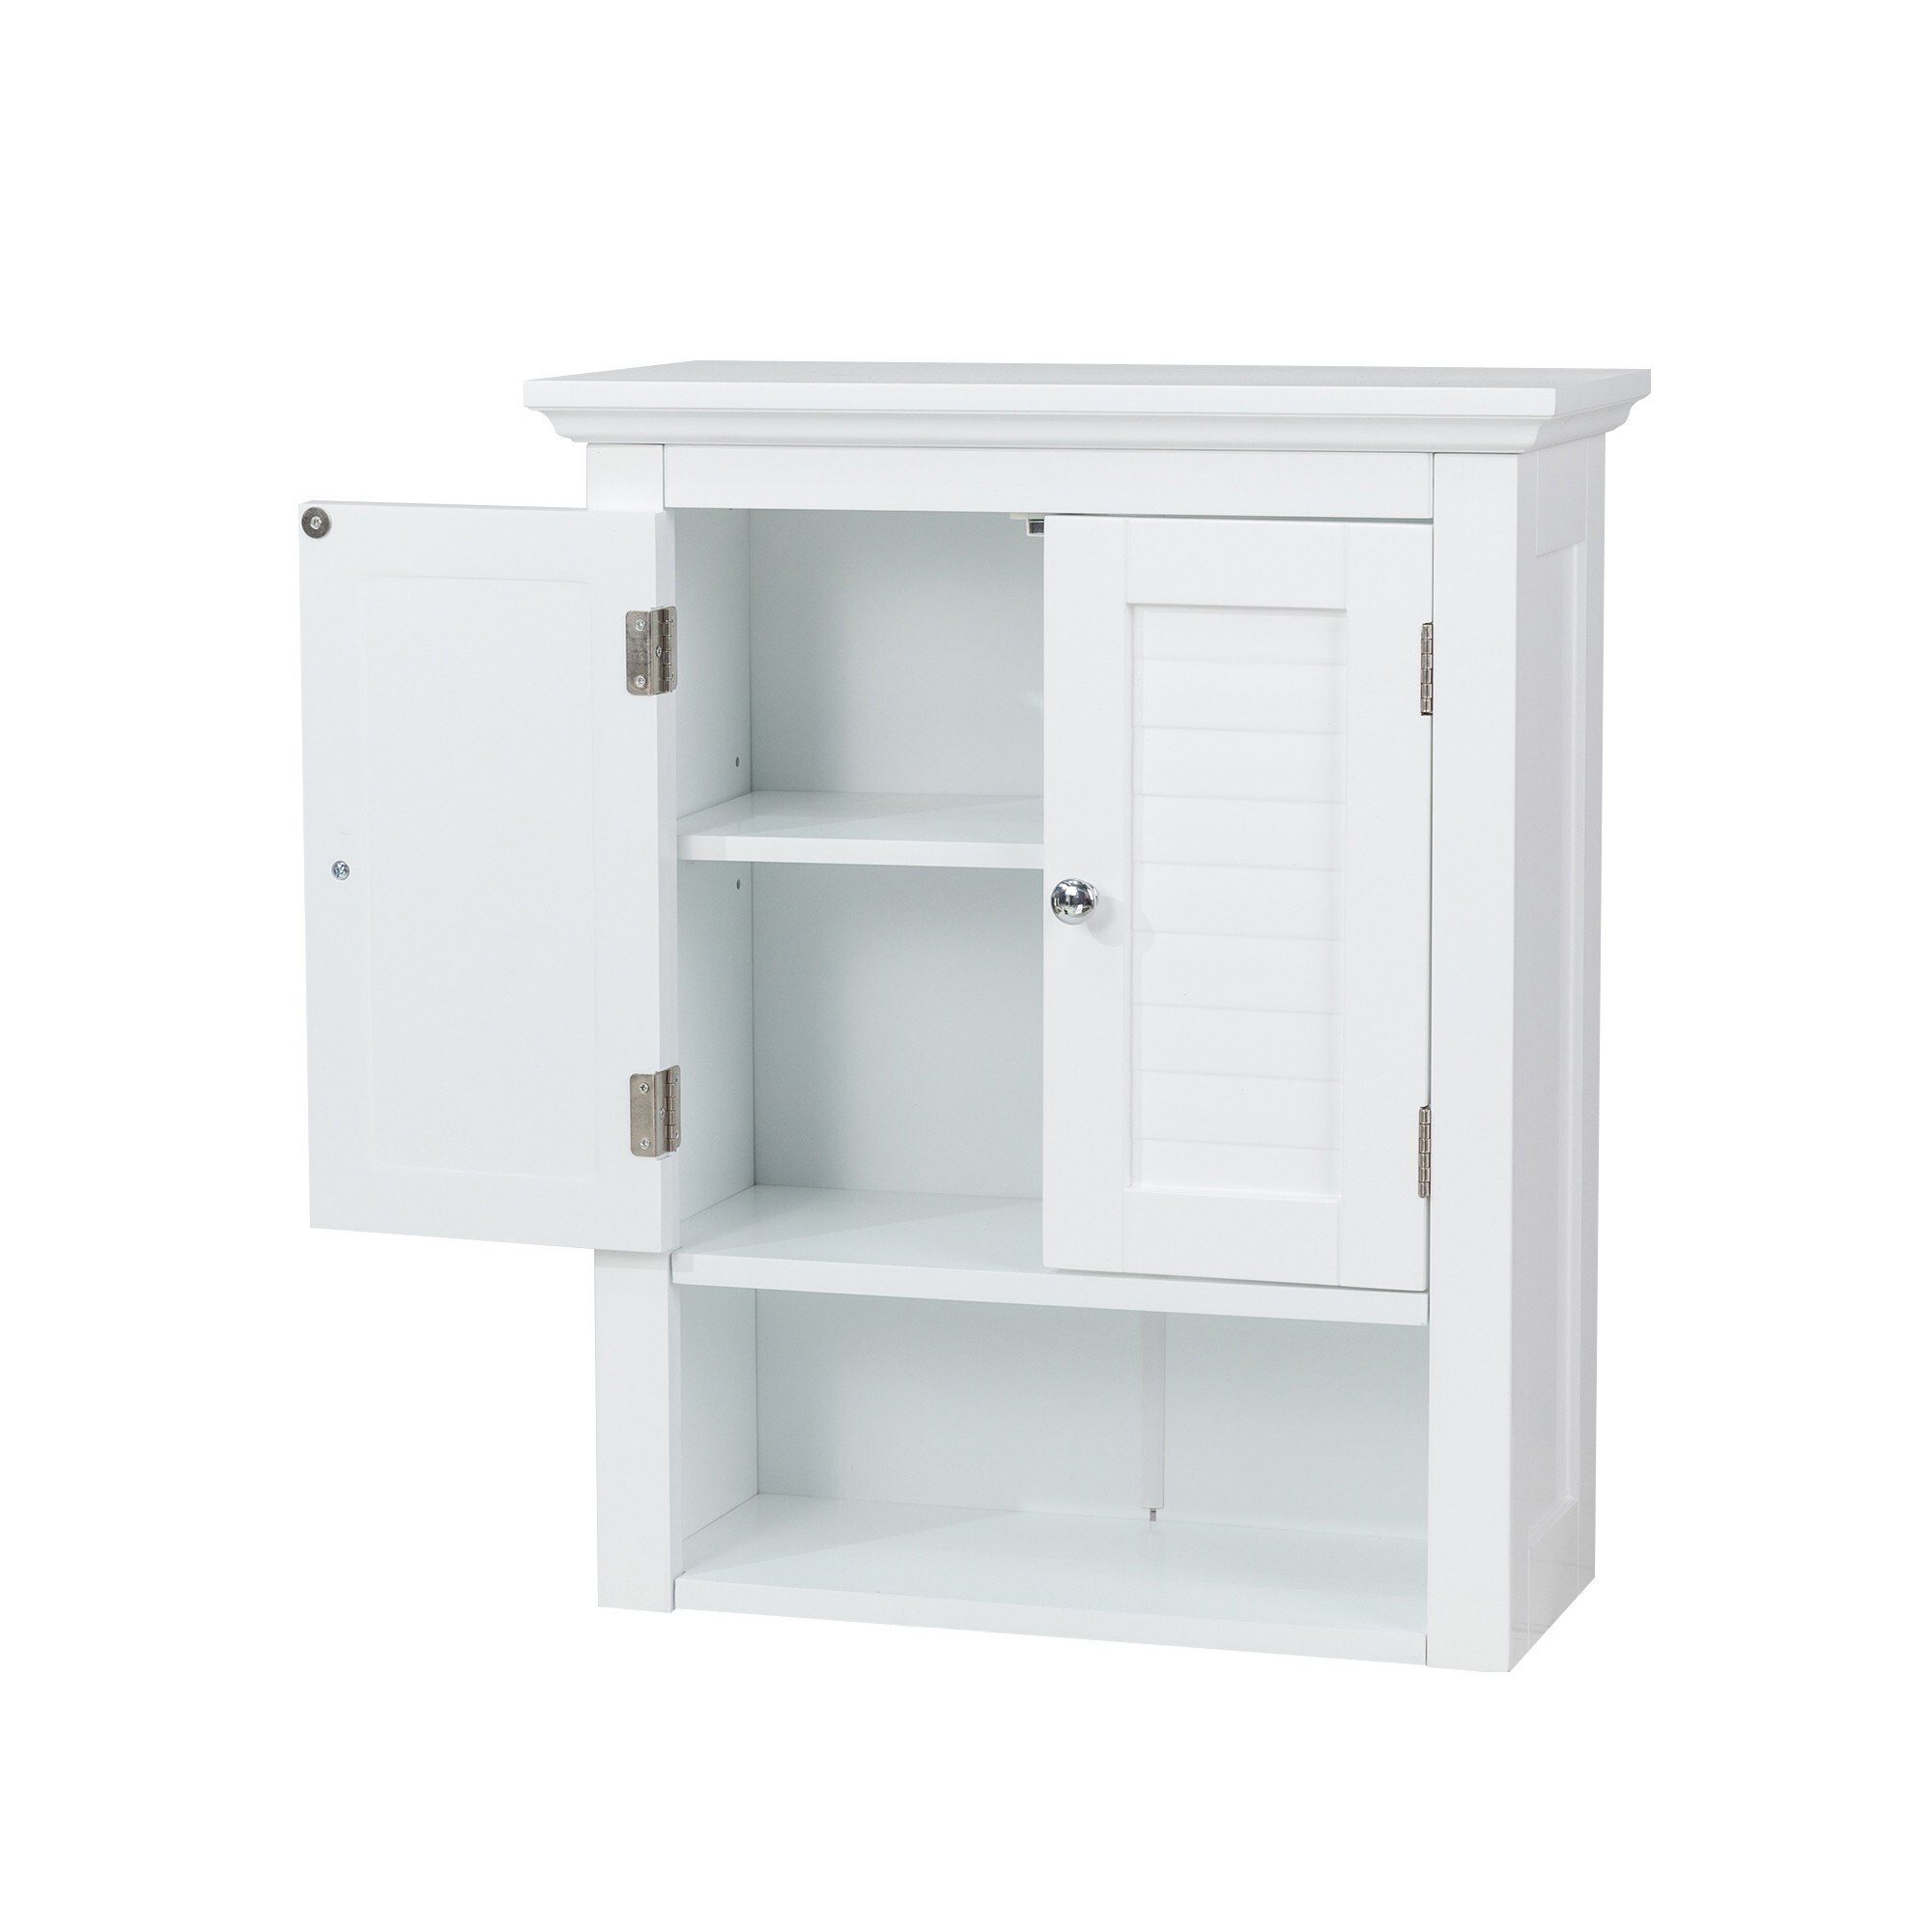 Hastings Home 752372JYF Bathroom Storage Cabinet - White